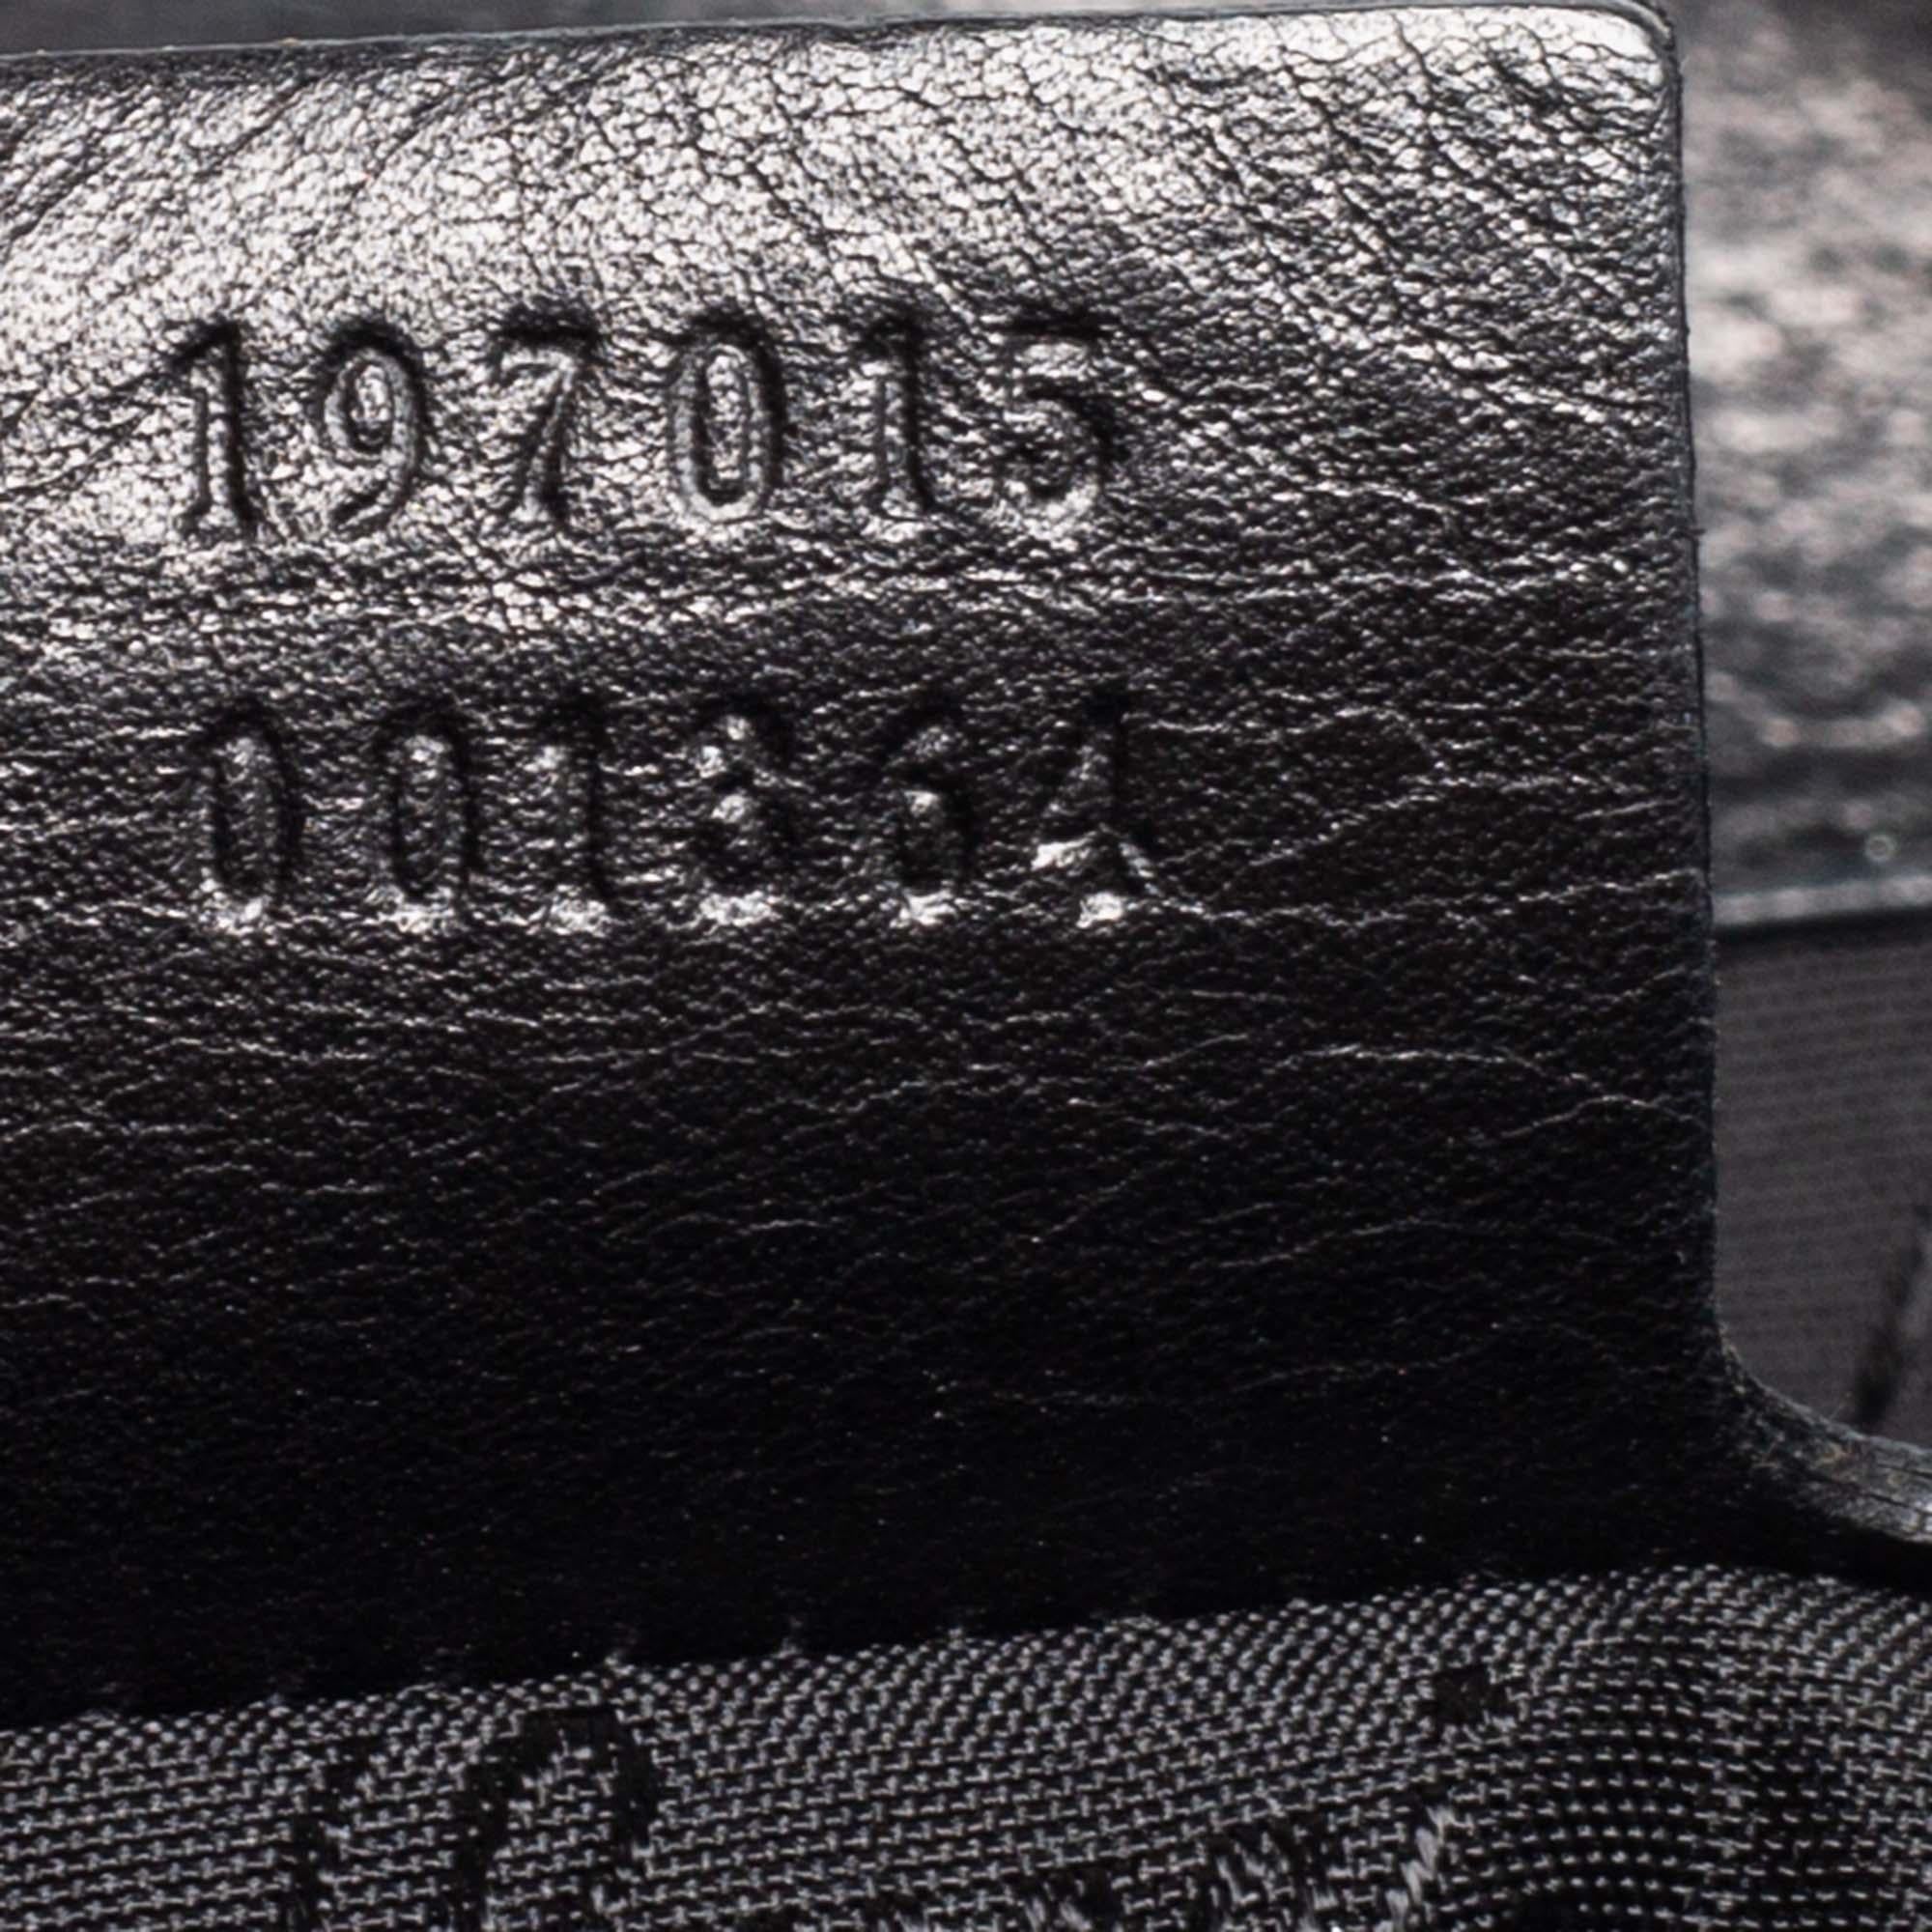 Gucci Black Patent Leather Large Hysteria Clutch 4